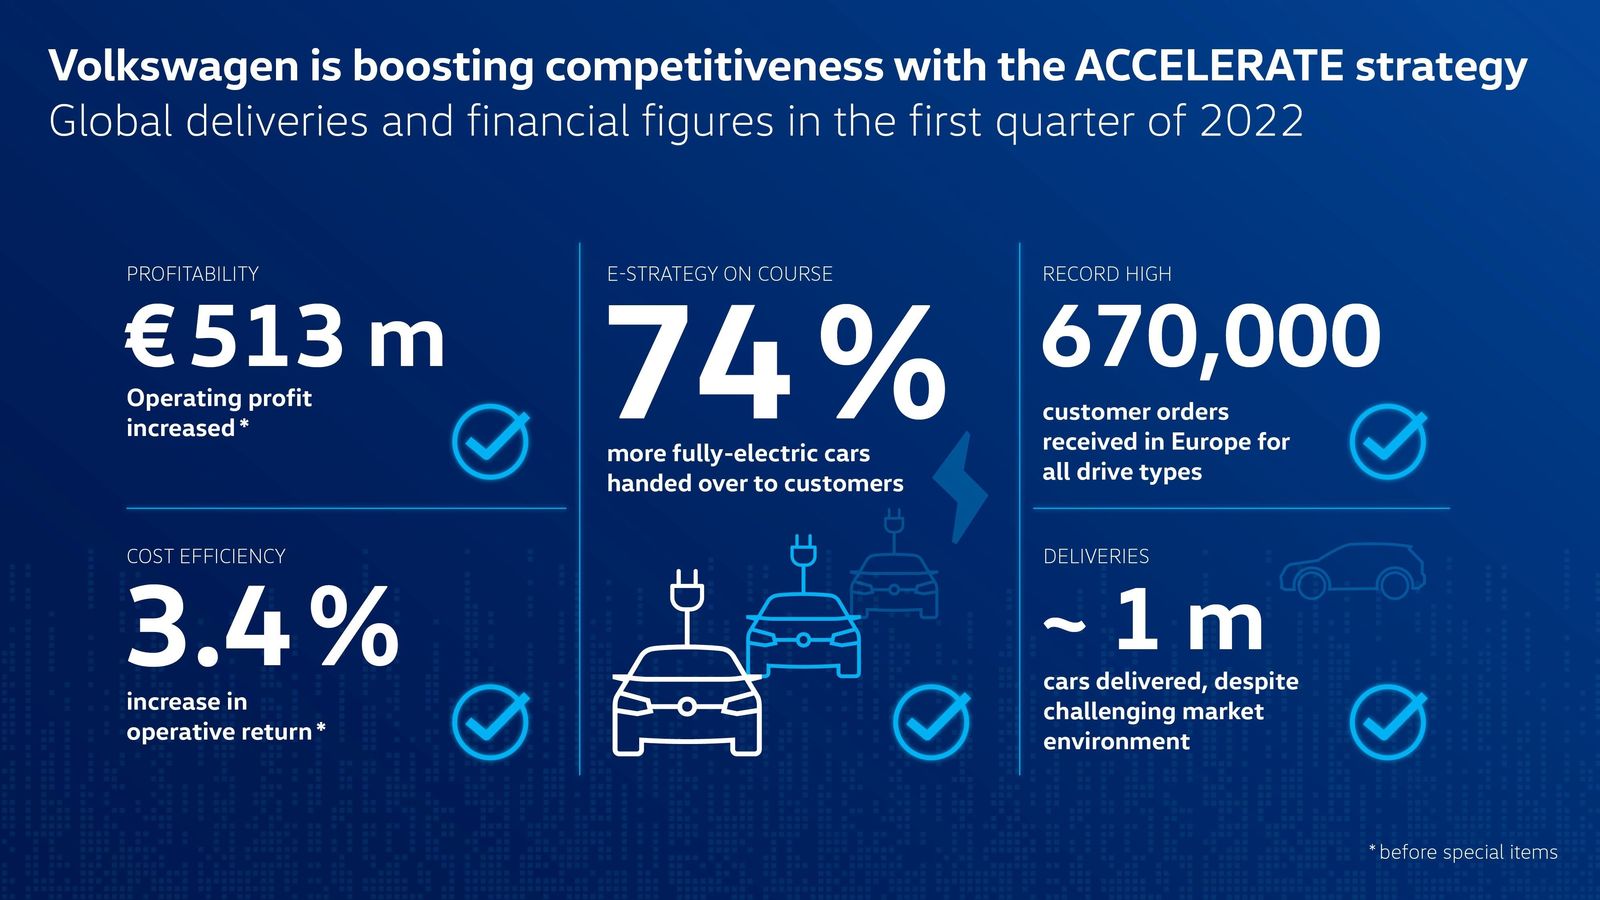 Volkswagen improves cost efficiency and economic efficiency in a